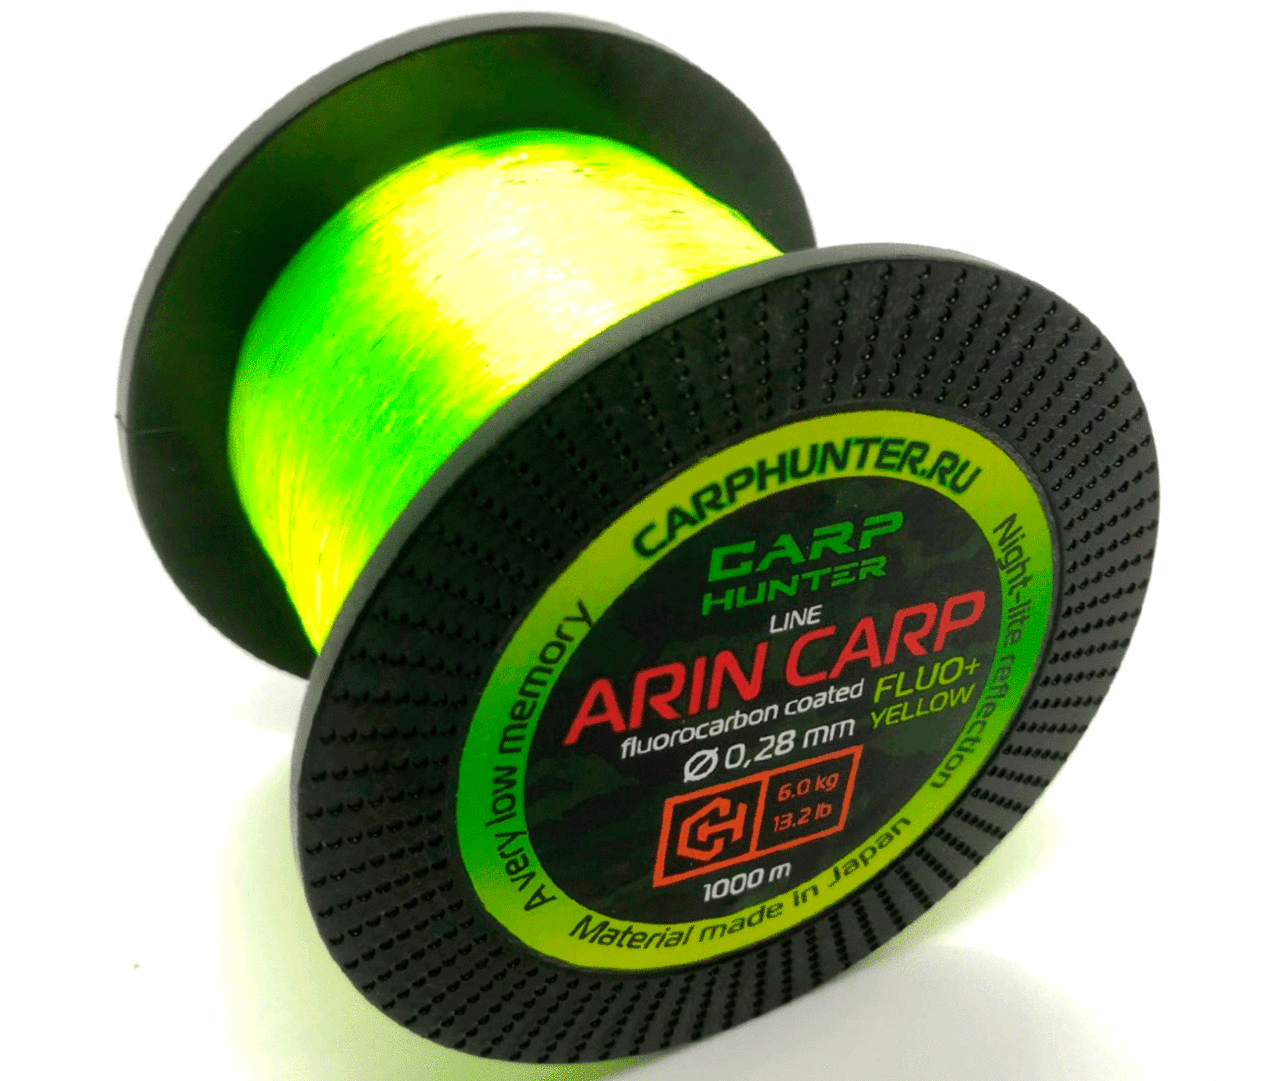 Леска 0.28 мм Желтая Carp Hunter (Карп Хантер) - Arin Carp Fluo Yellow 6.0 кг / 13.2lb, 1000 м